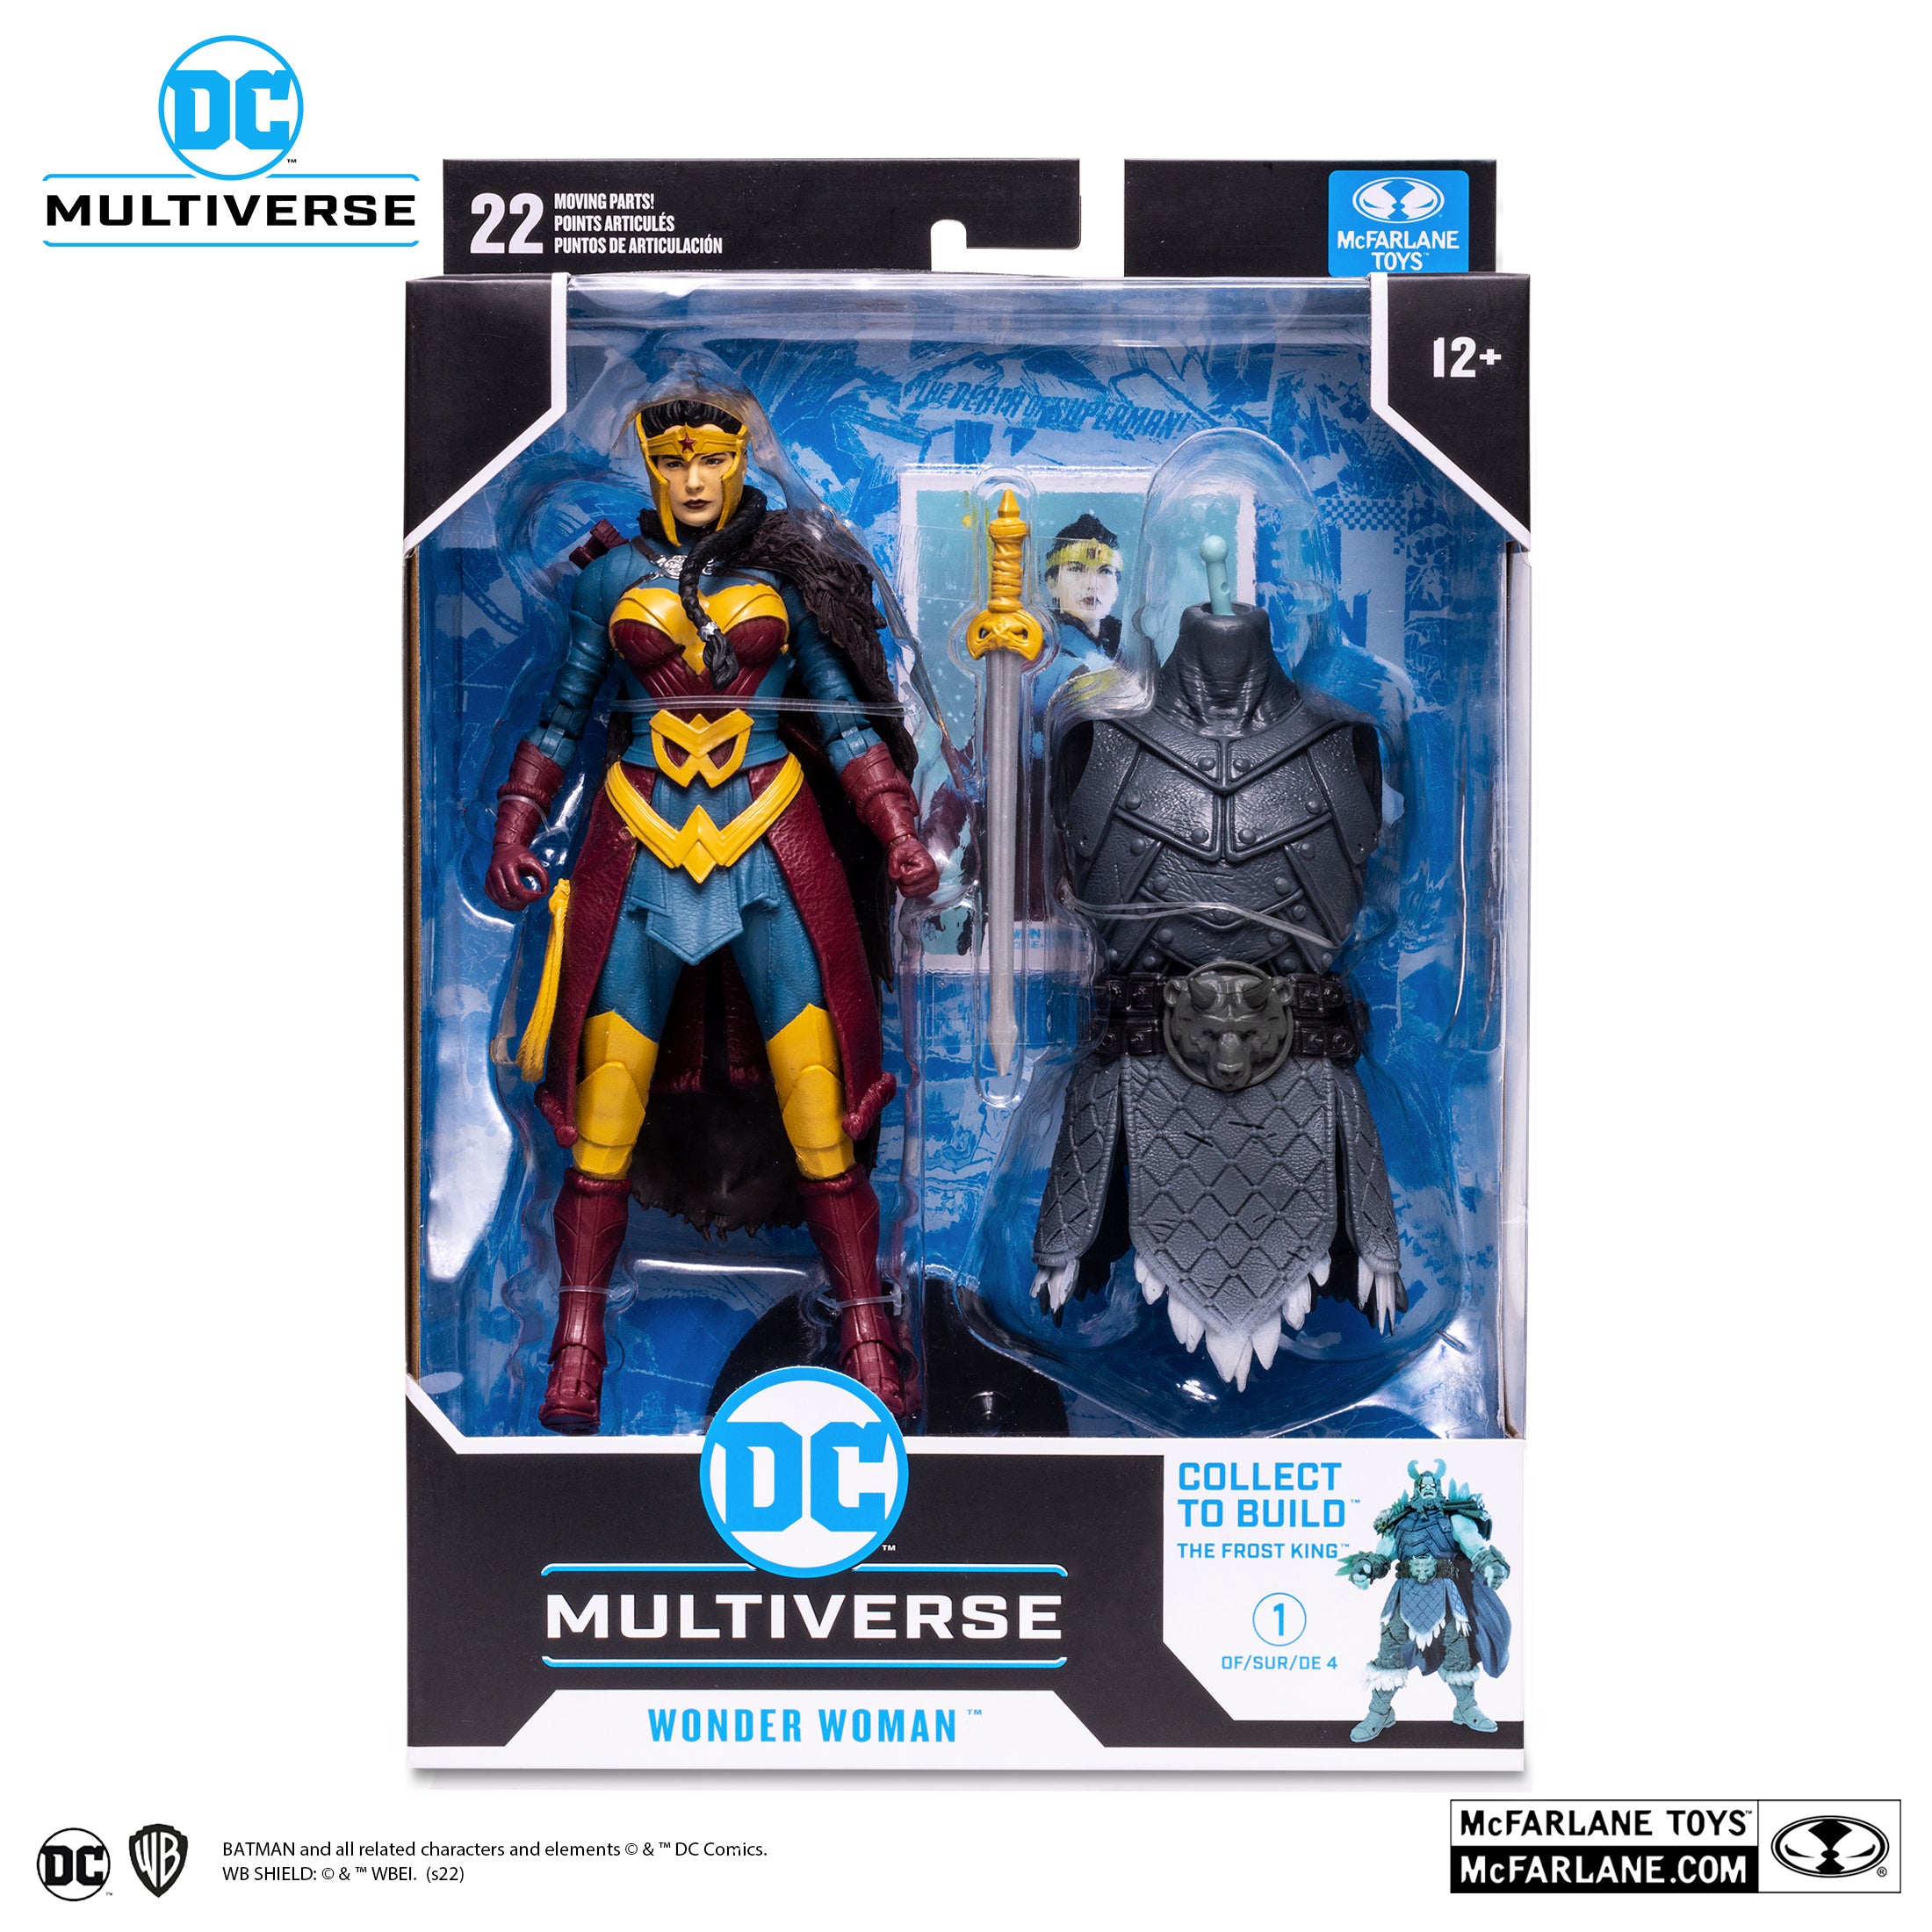 Endless Winter DC Multiverse Aquaman Action Figure